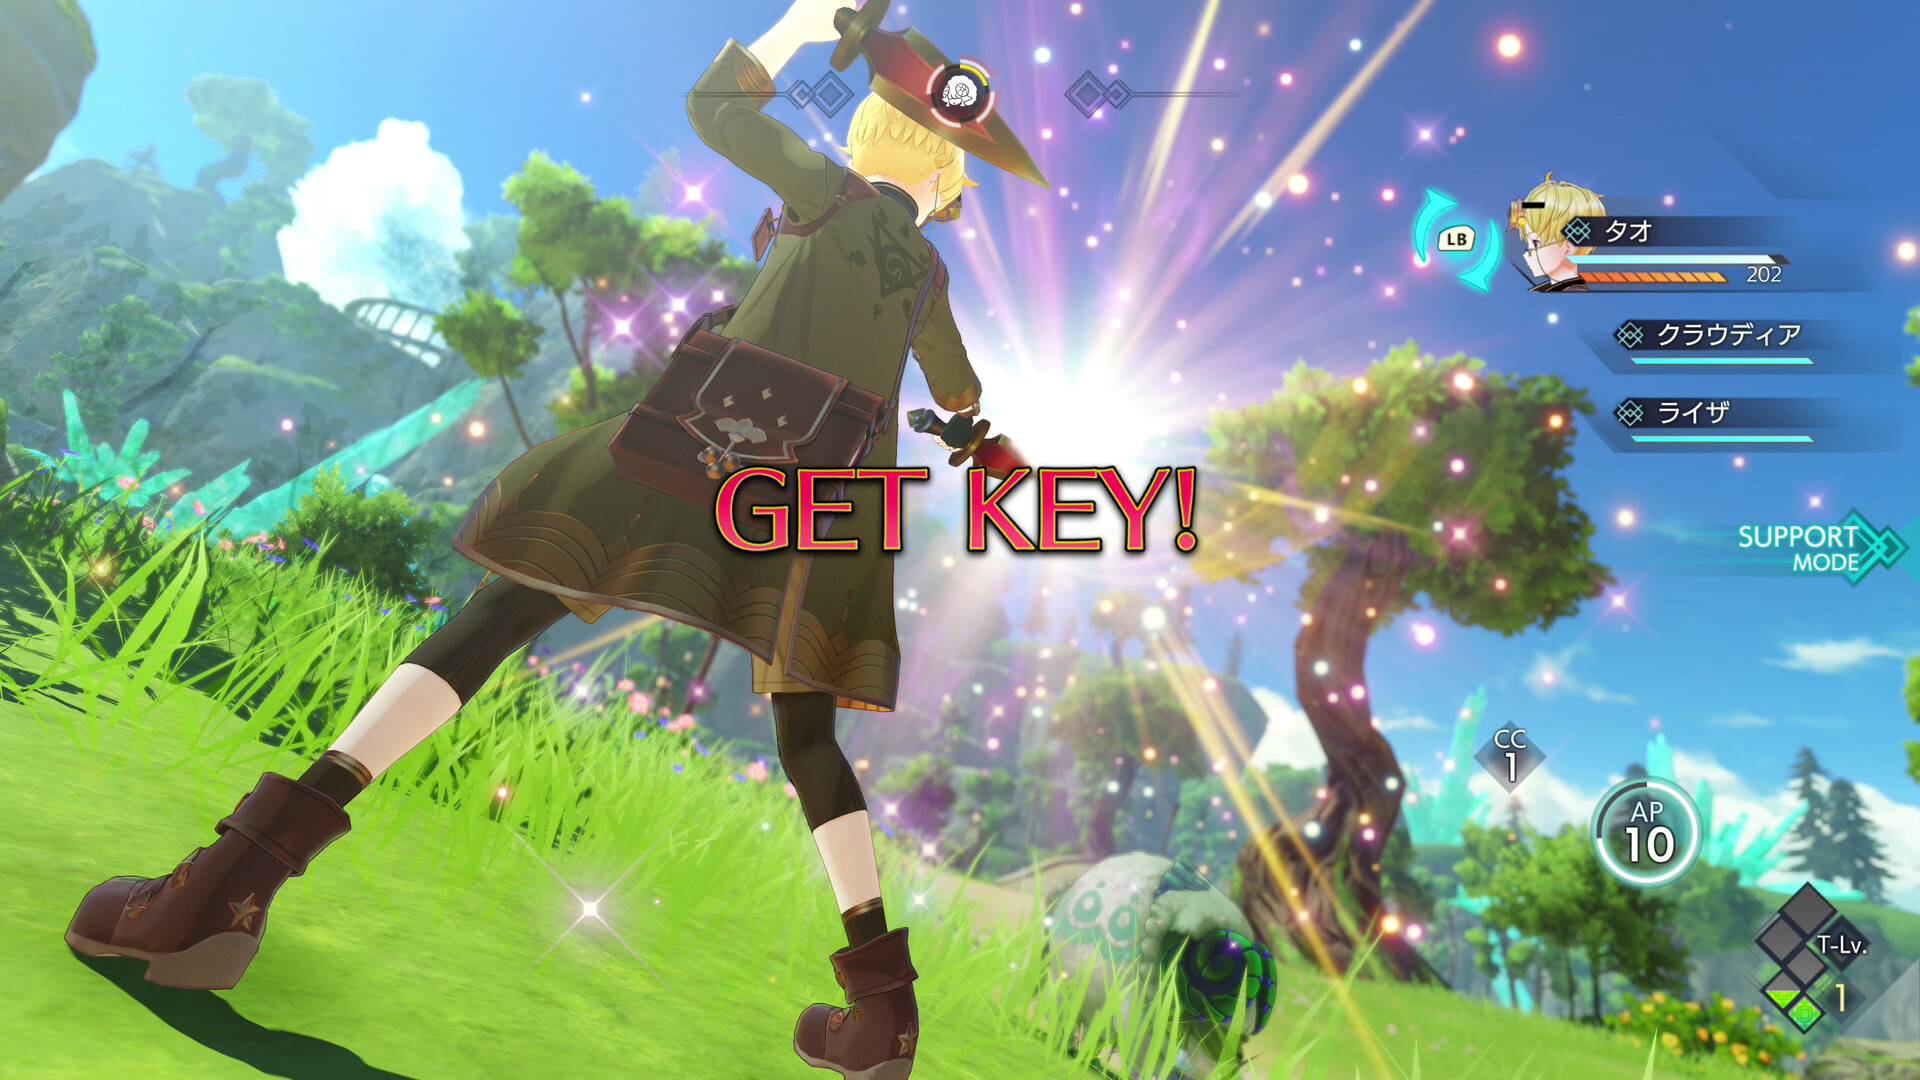 Atelier Ryza 3: Alchemist of the End & the Secret Key Ultimate Edition EU Steam CD Key 89.47 $